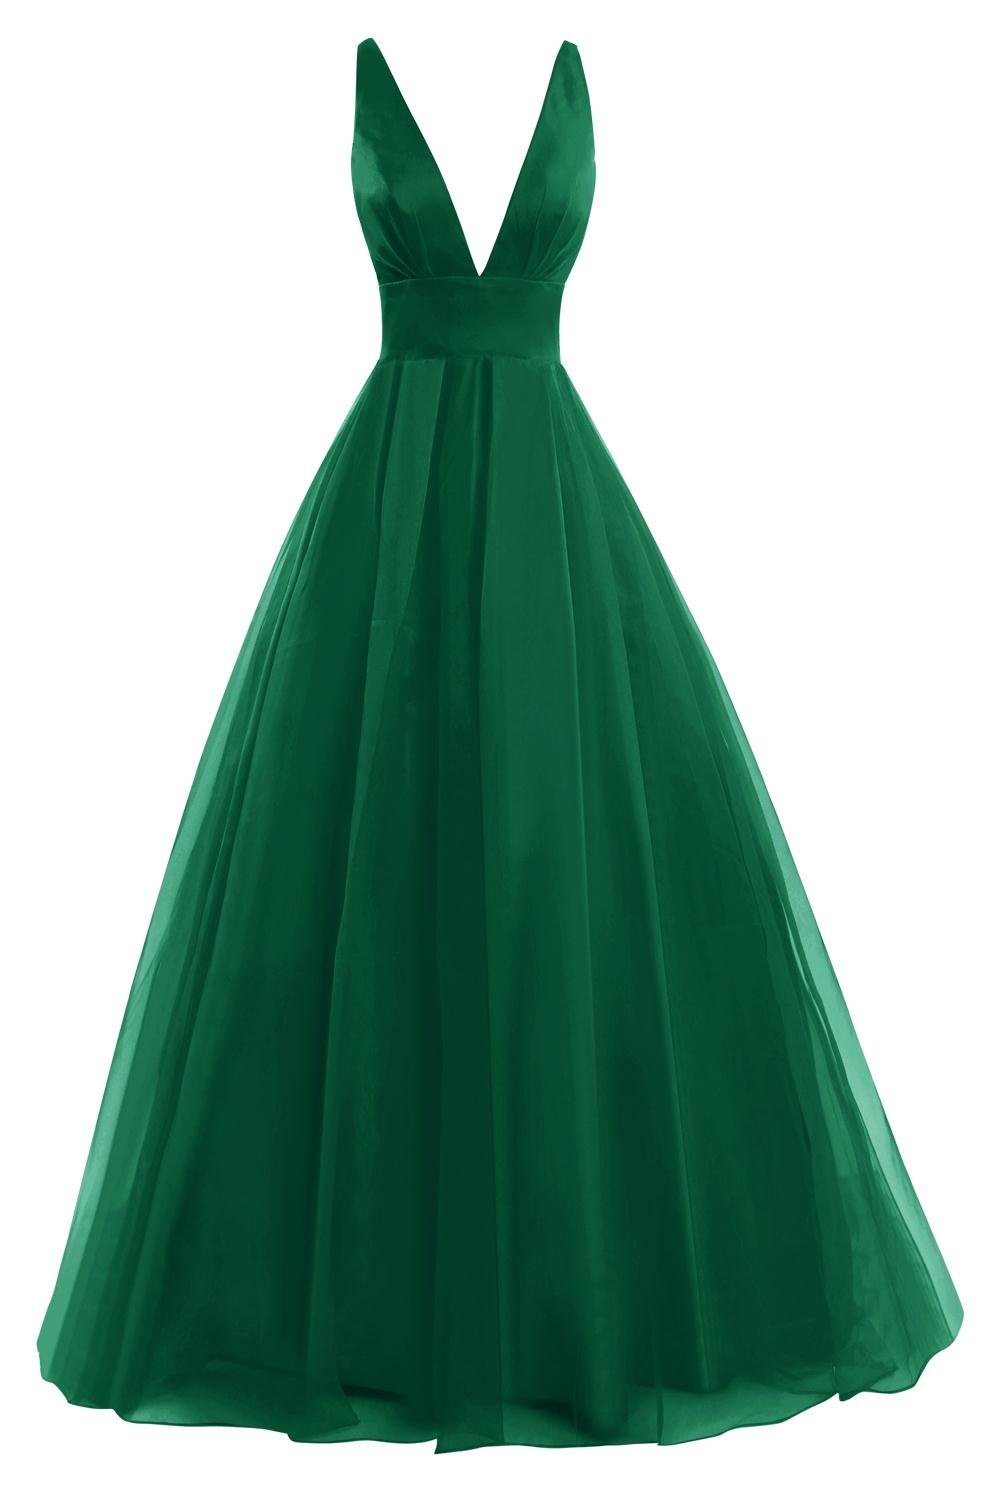 Deep V Neck Prom Dress, Formal Evening Gowns, Green Prom Dress, Sexy Back Prom Dress, Simple Prom Dress, Prom Dress, Woman Dresses Ja49